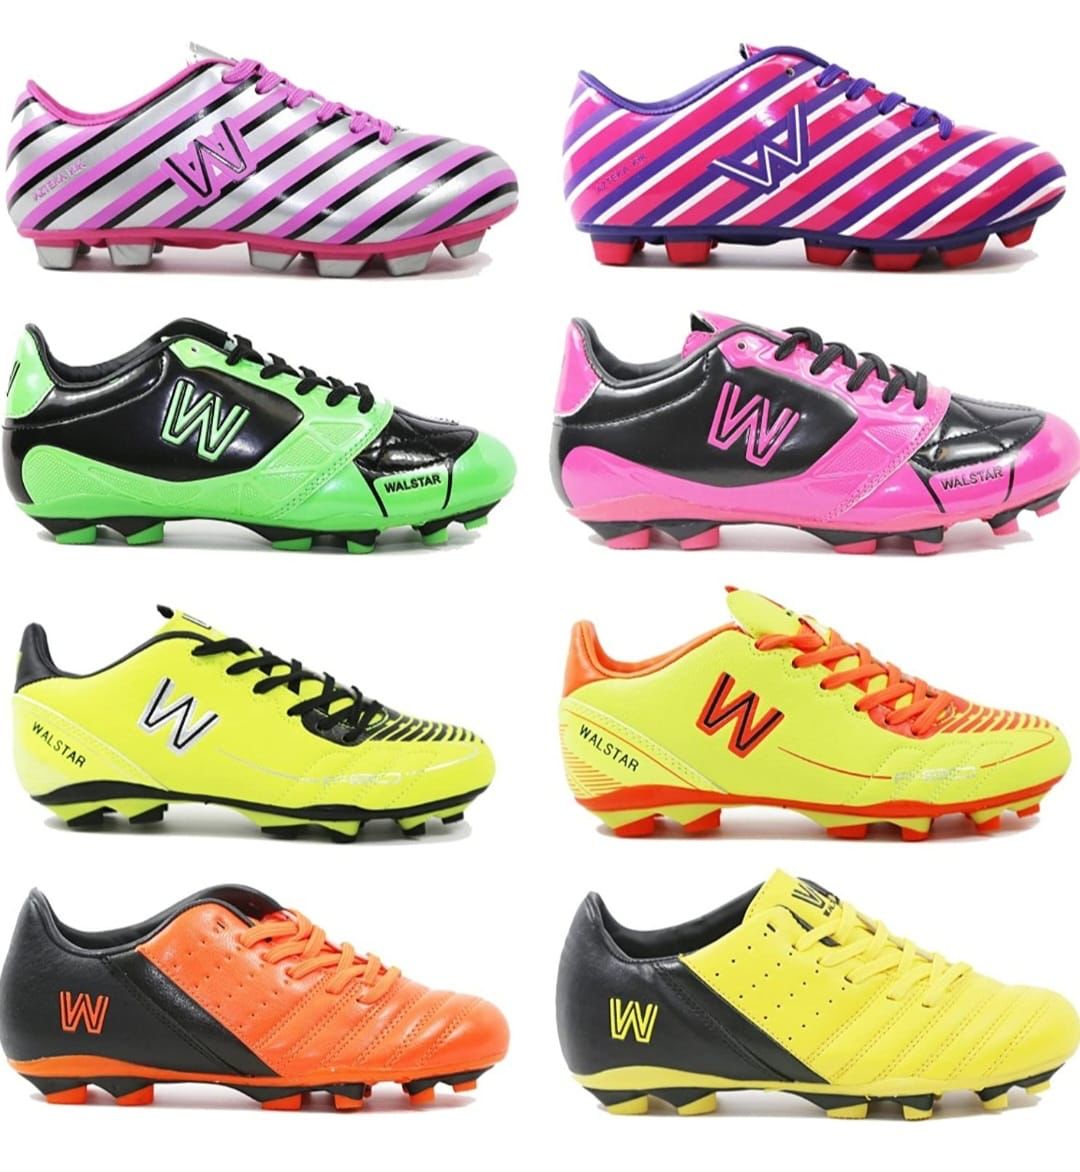 46849 - Walstar kids' soccer shoes USA